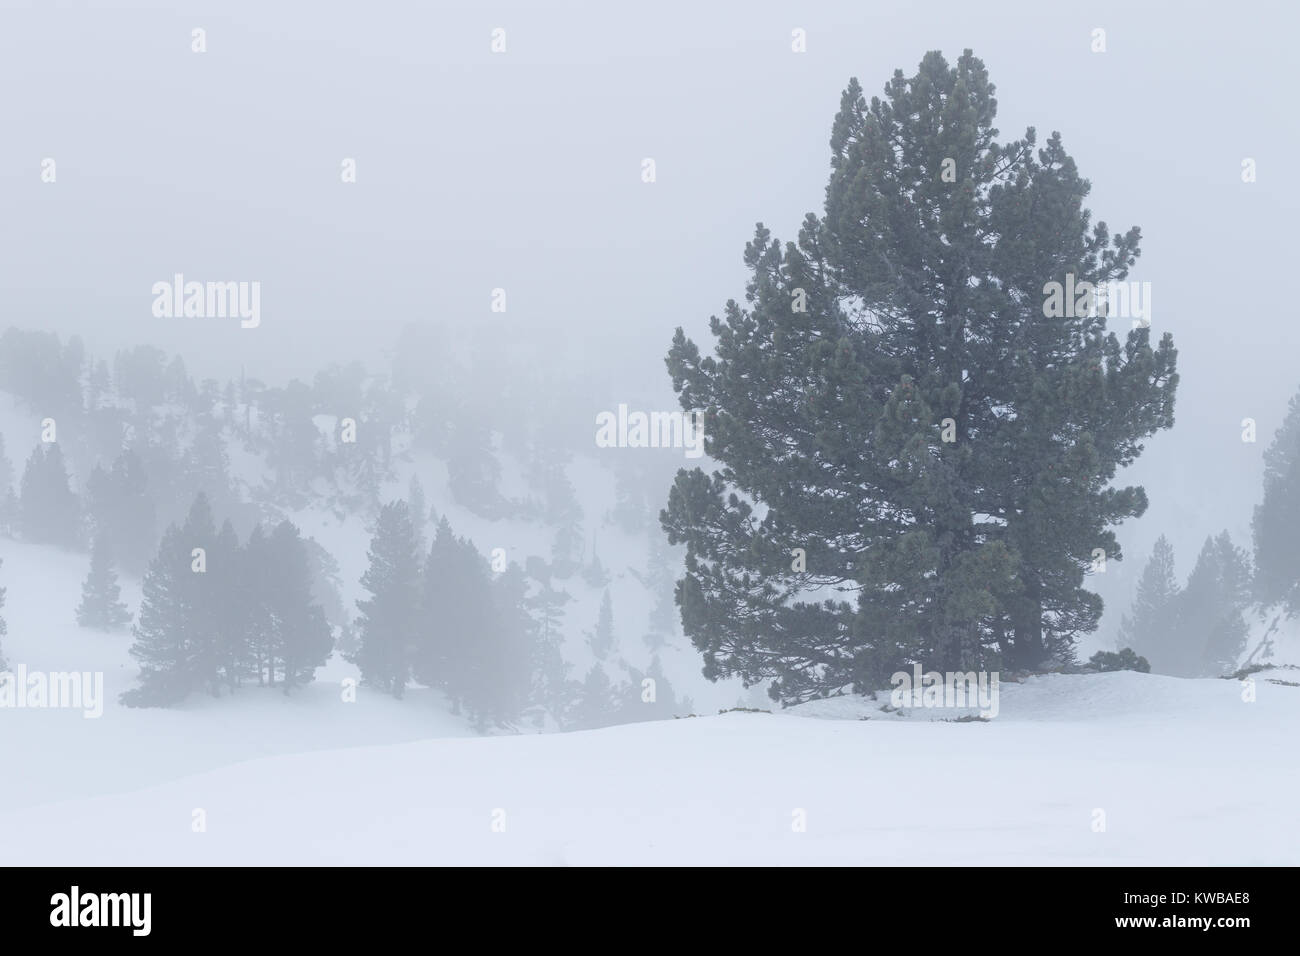 Pine tree in a snowed and foggy landscape,  Larra, Navarra Stock Photo